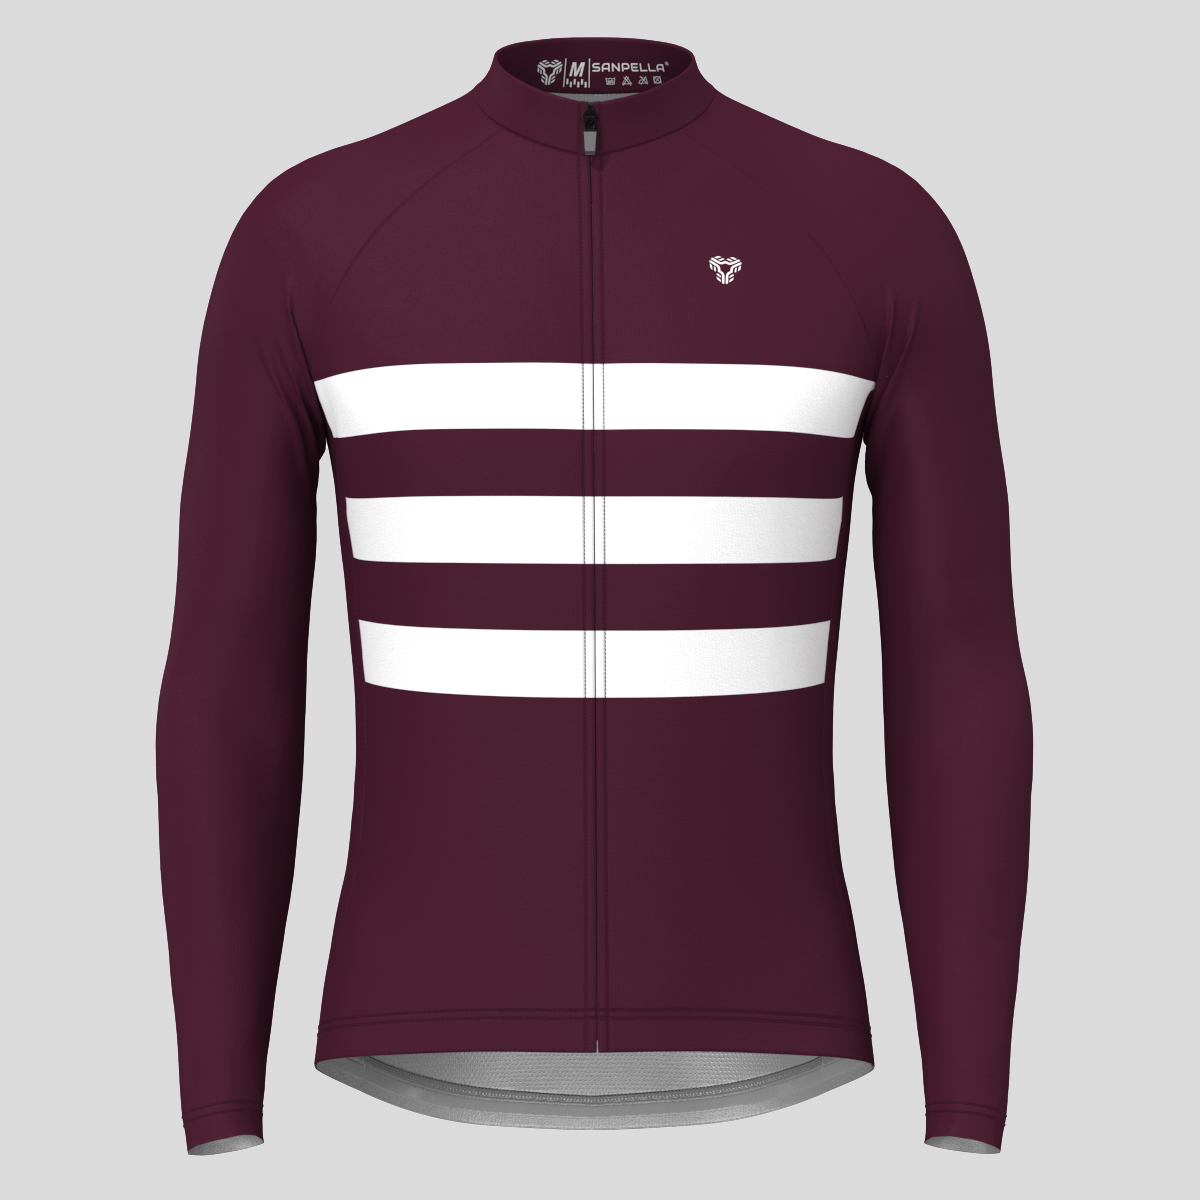 Men's Classic Stripes LS Cycling Jersey - Burgundy